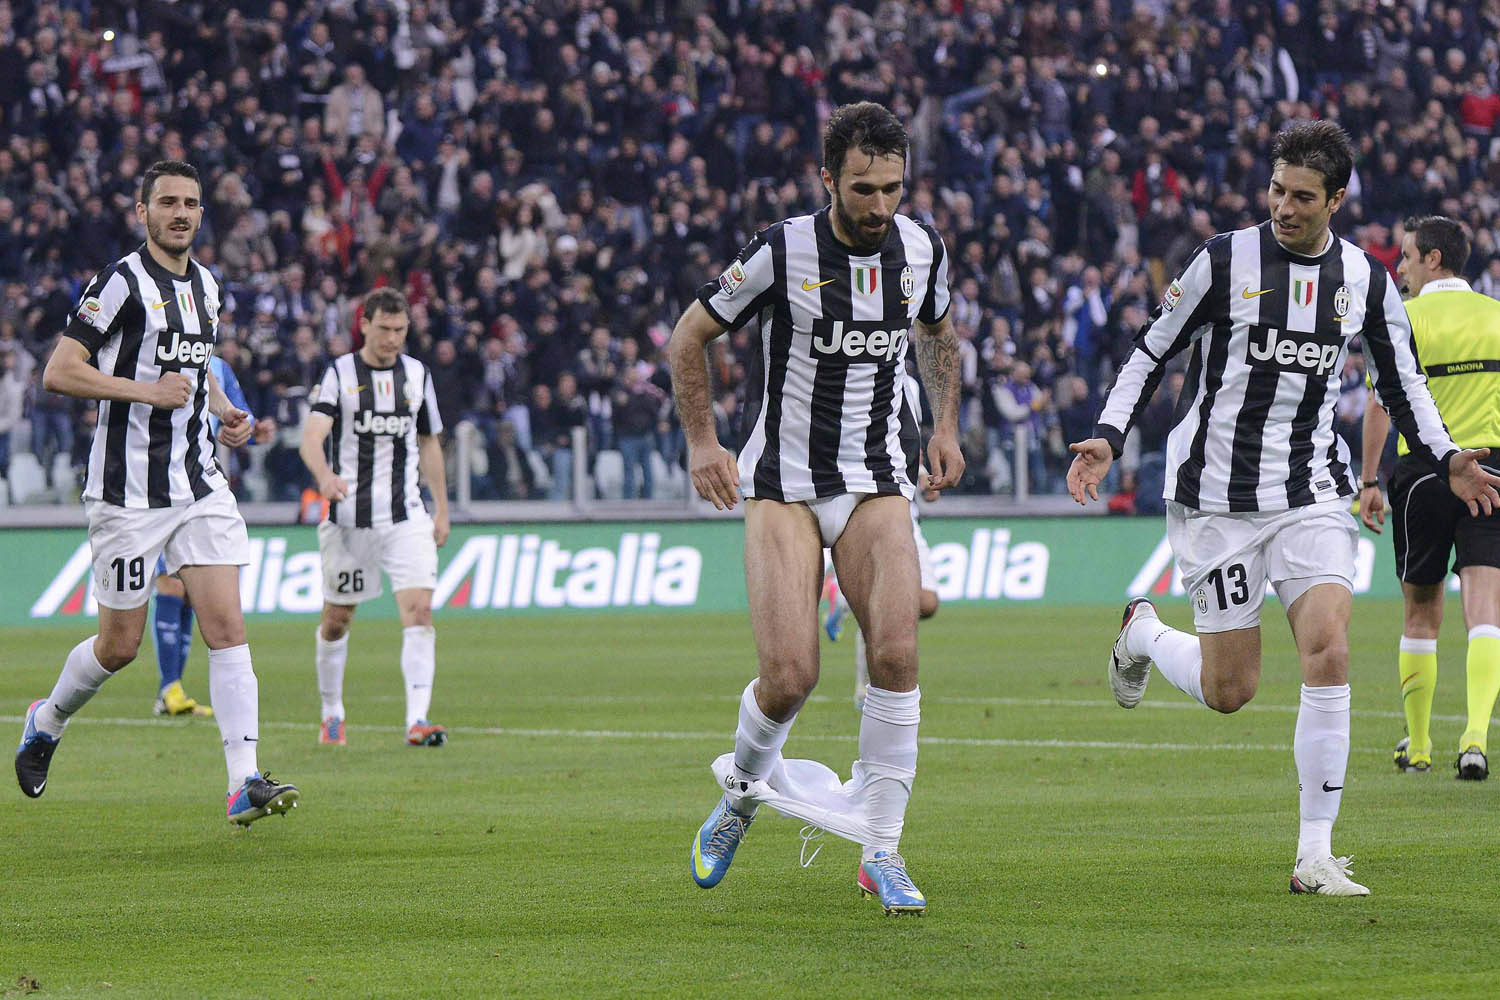 Juventus' Mirko Vucinic celebrates after scoring against Pescara during their Italian Serie A soccer match at the Juventus stadium in Turin